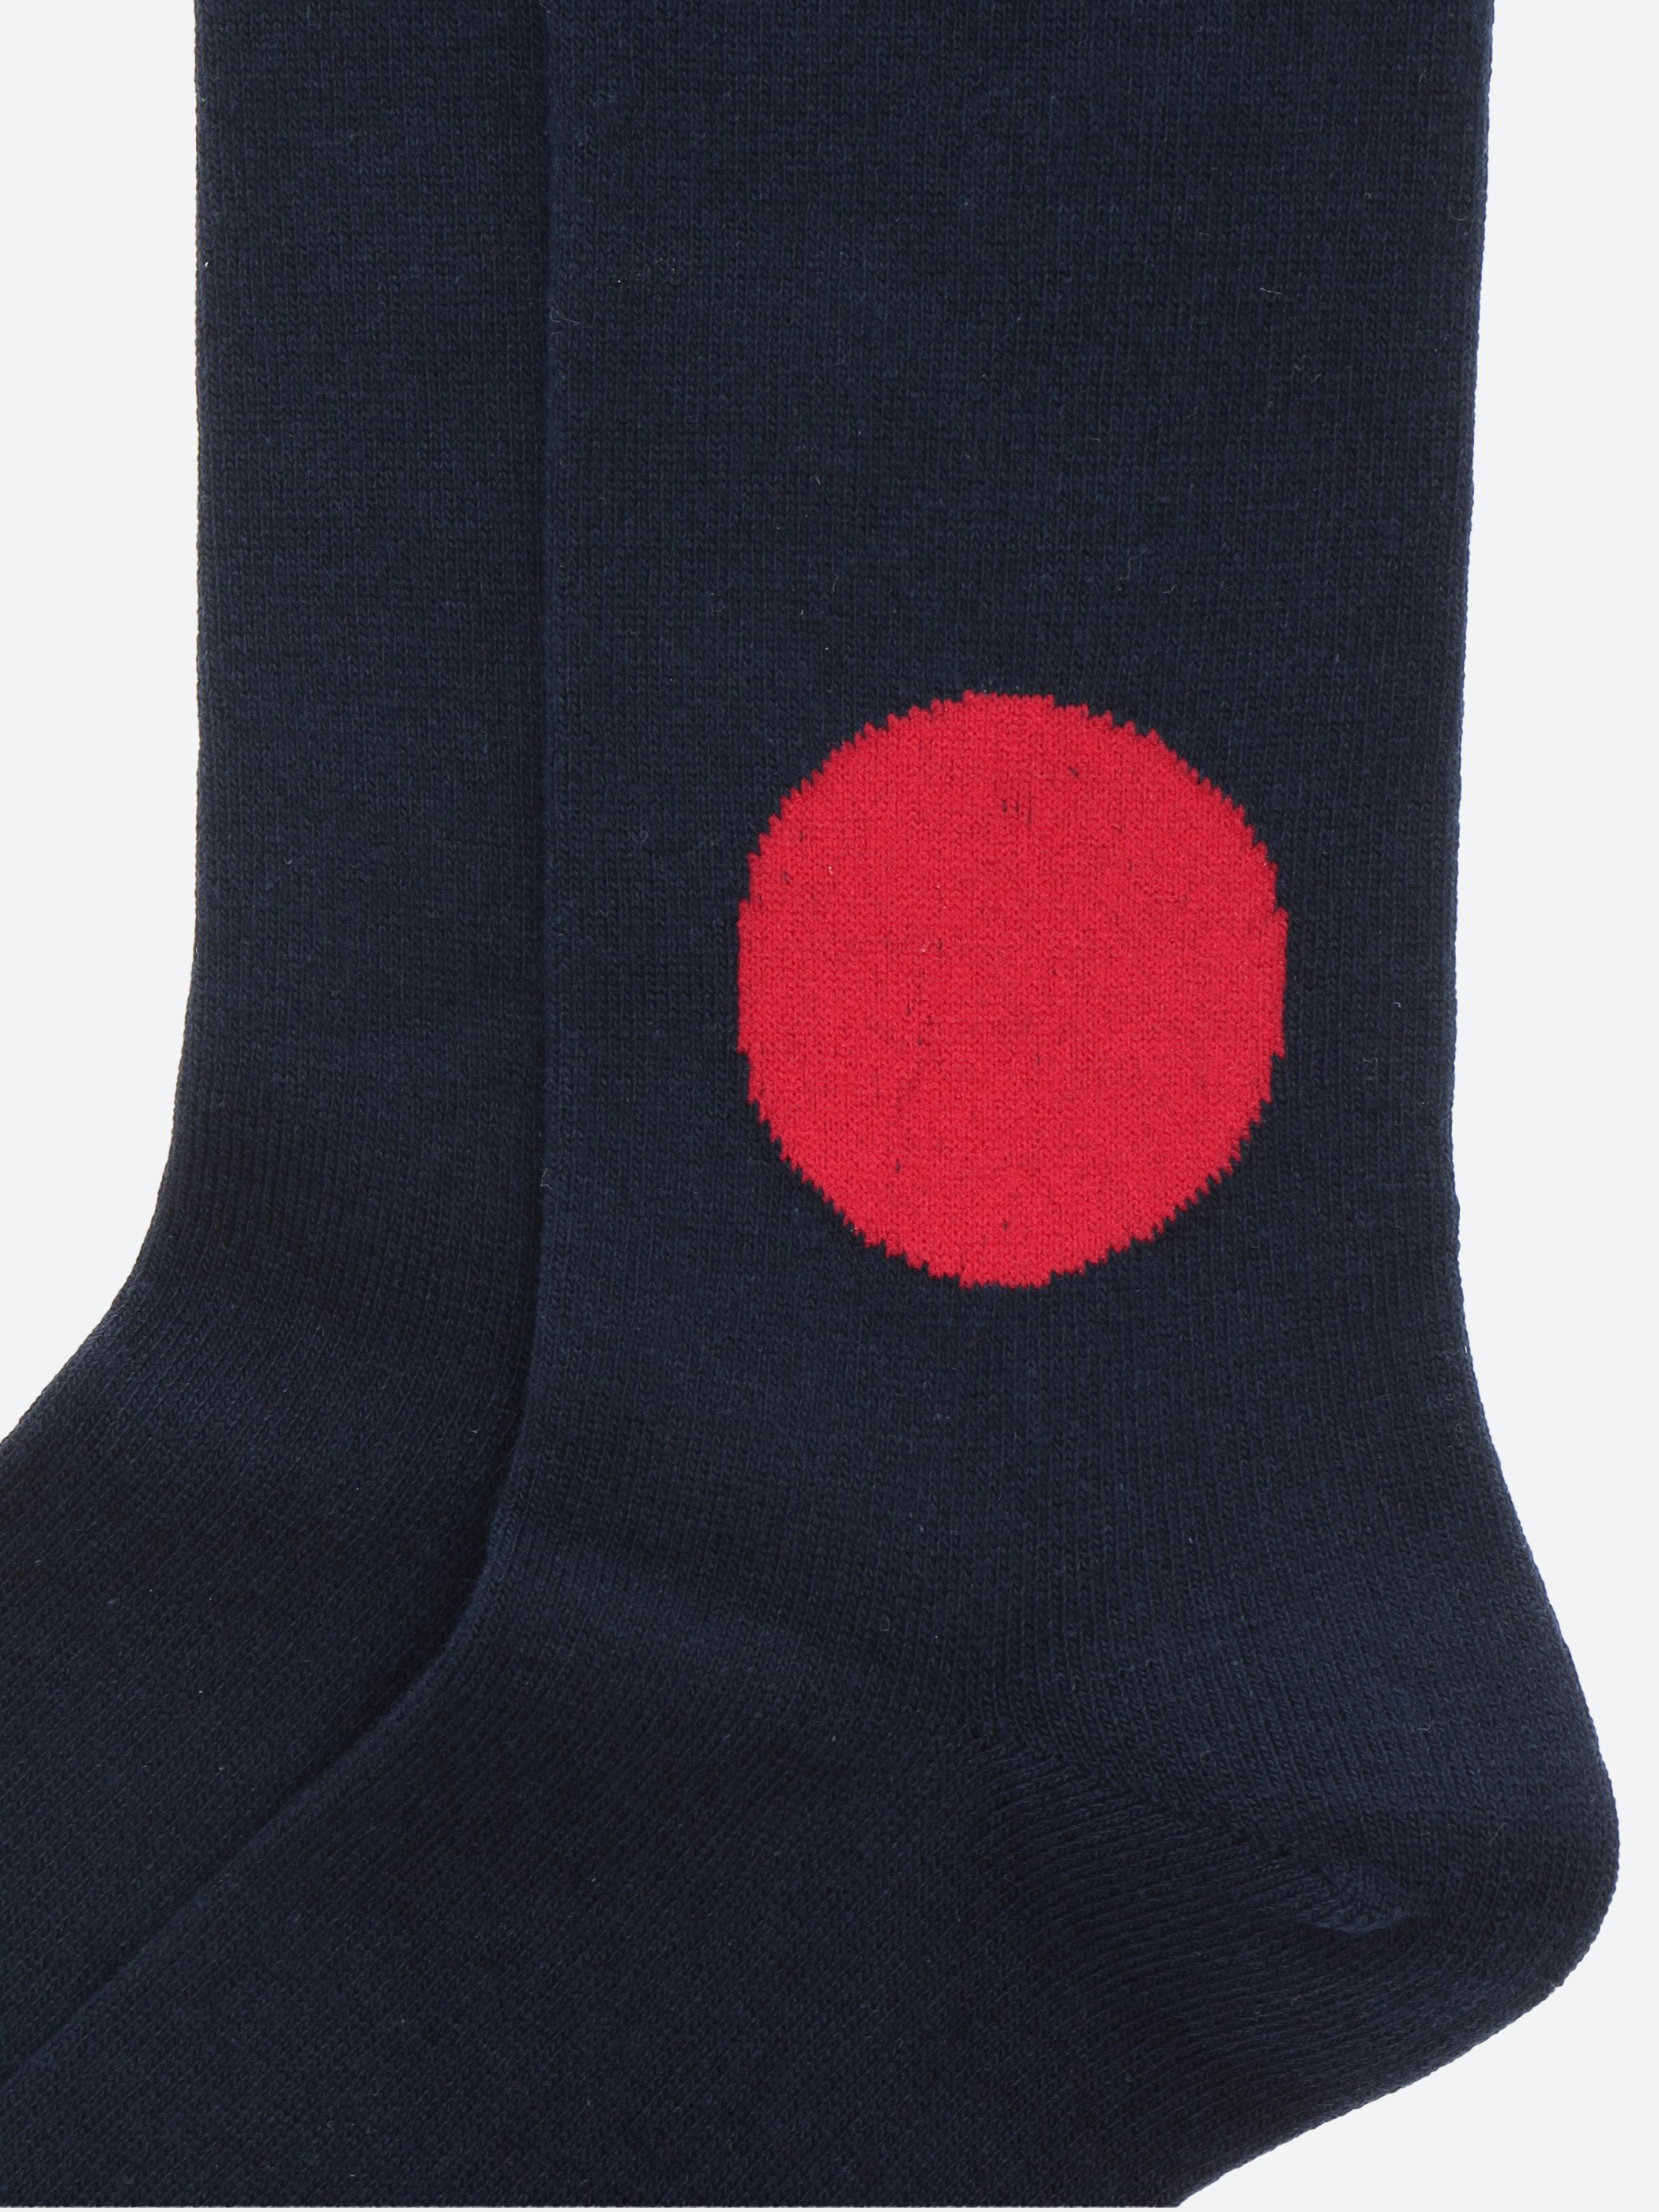 Japan Flag Sock